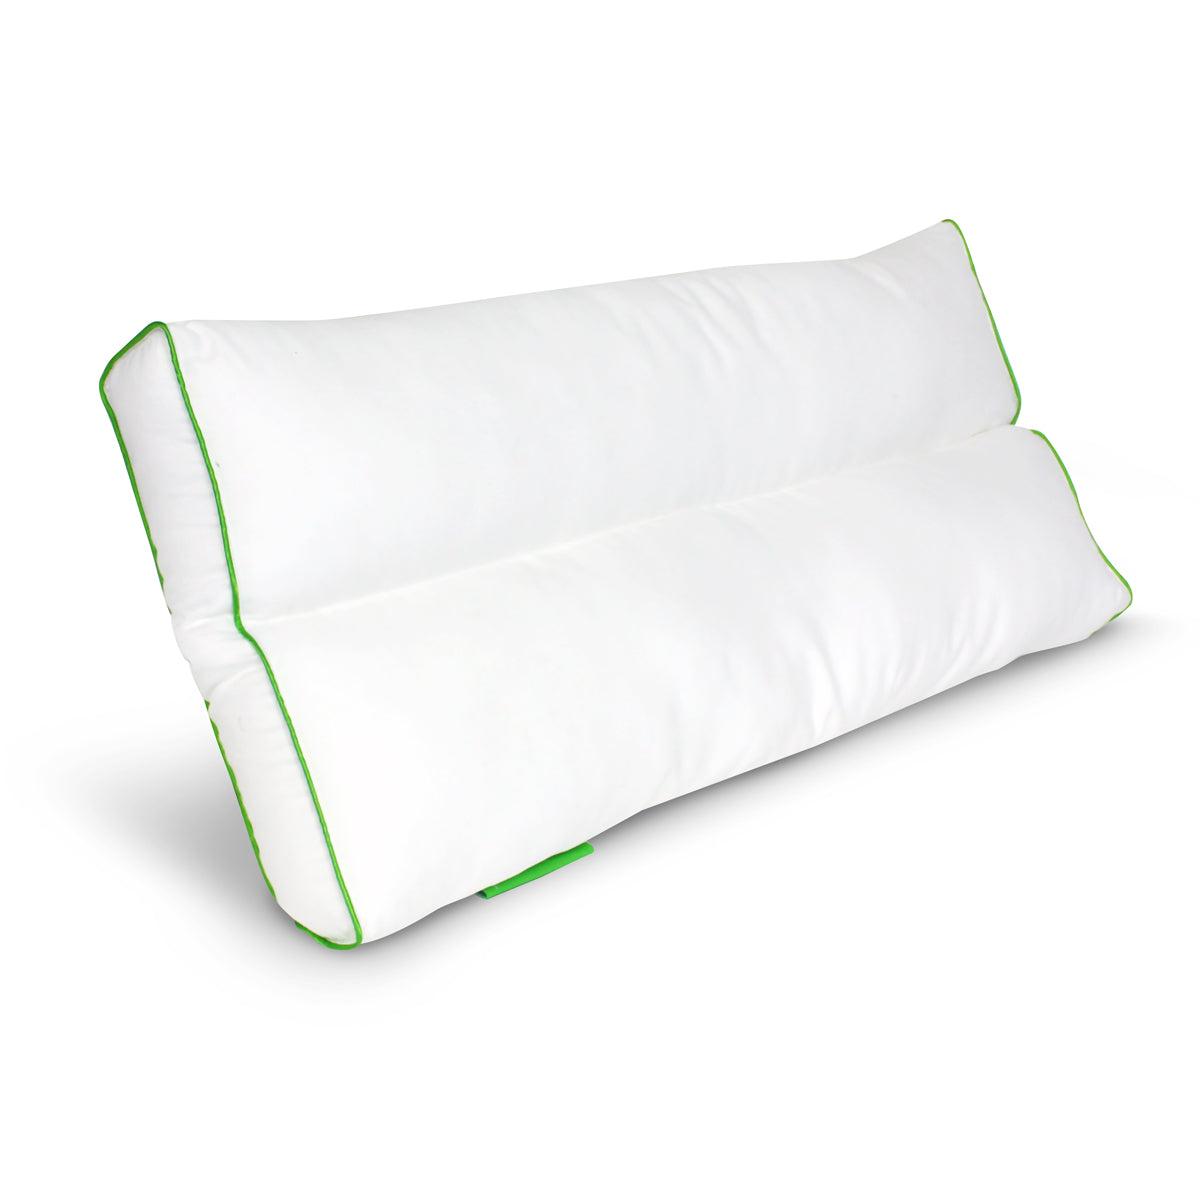 Alimed Side-sleep Knee Pillow Small, White